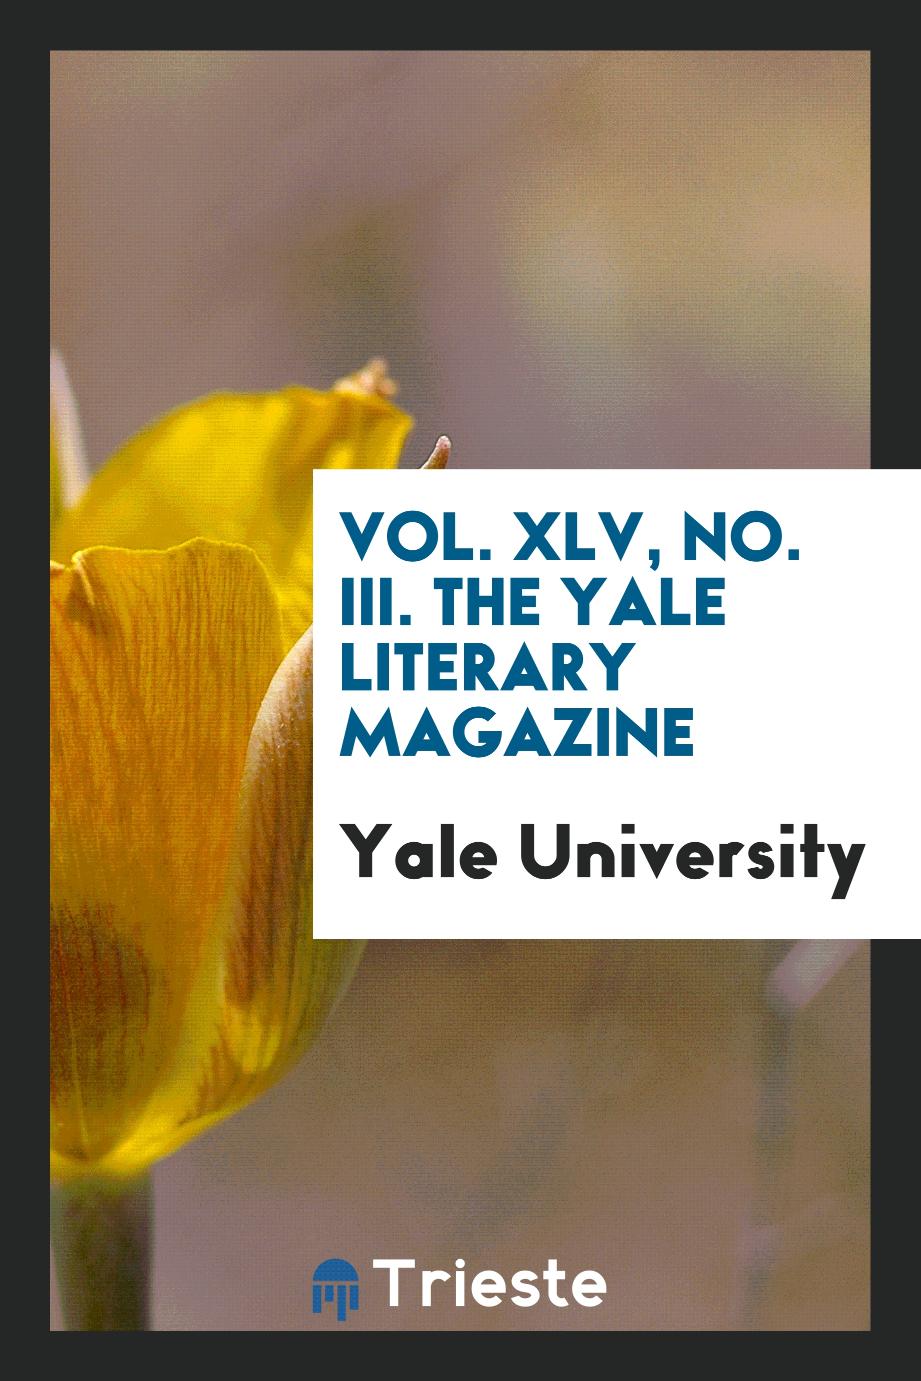 Vol. XLV, No. III. The Yale literary magazine